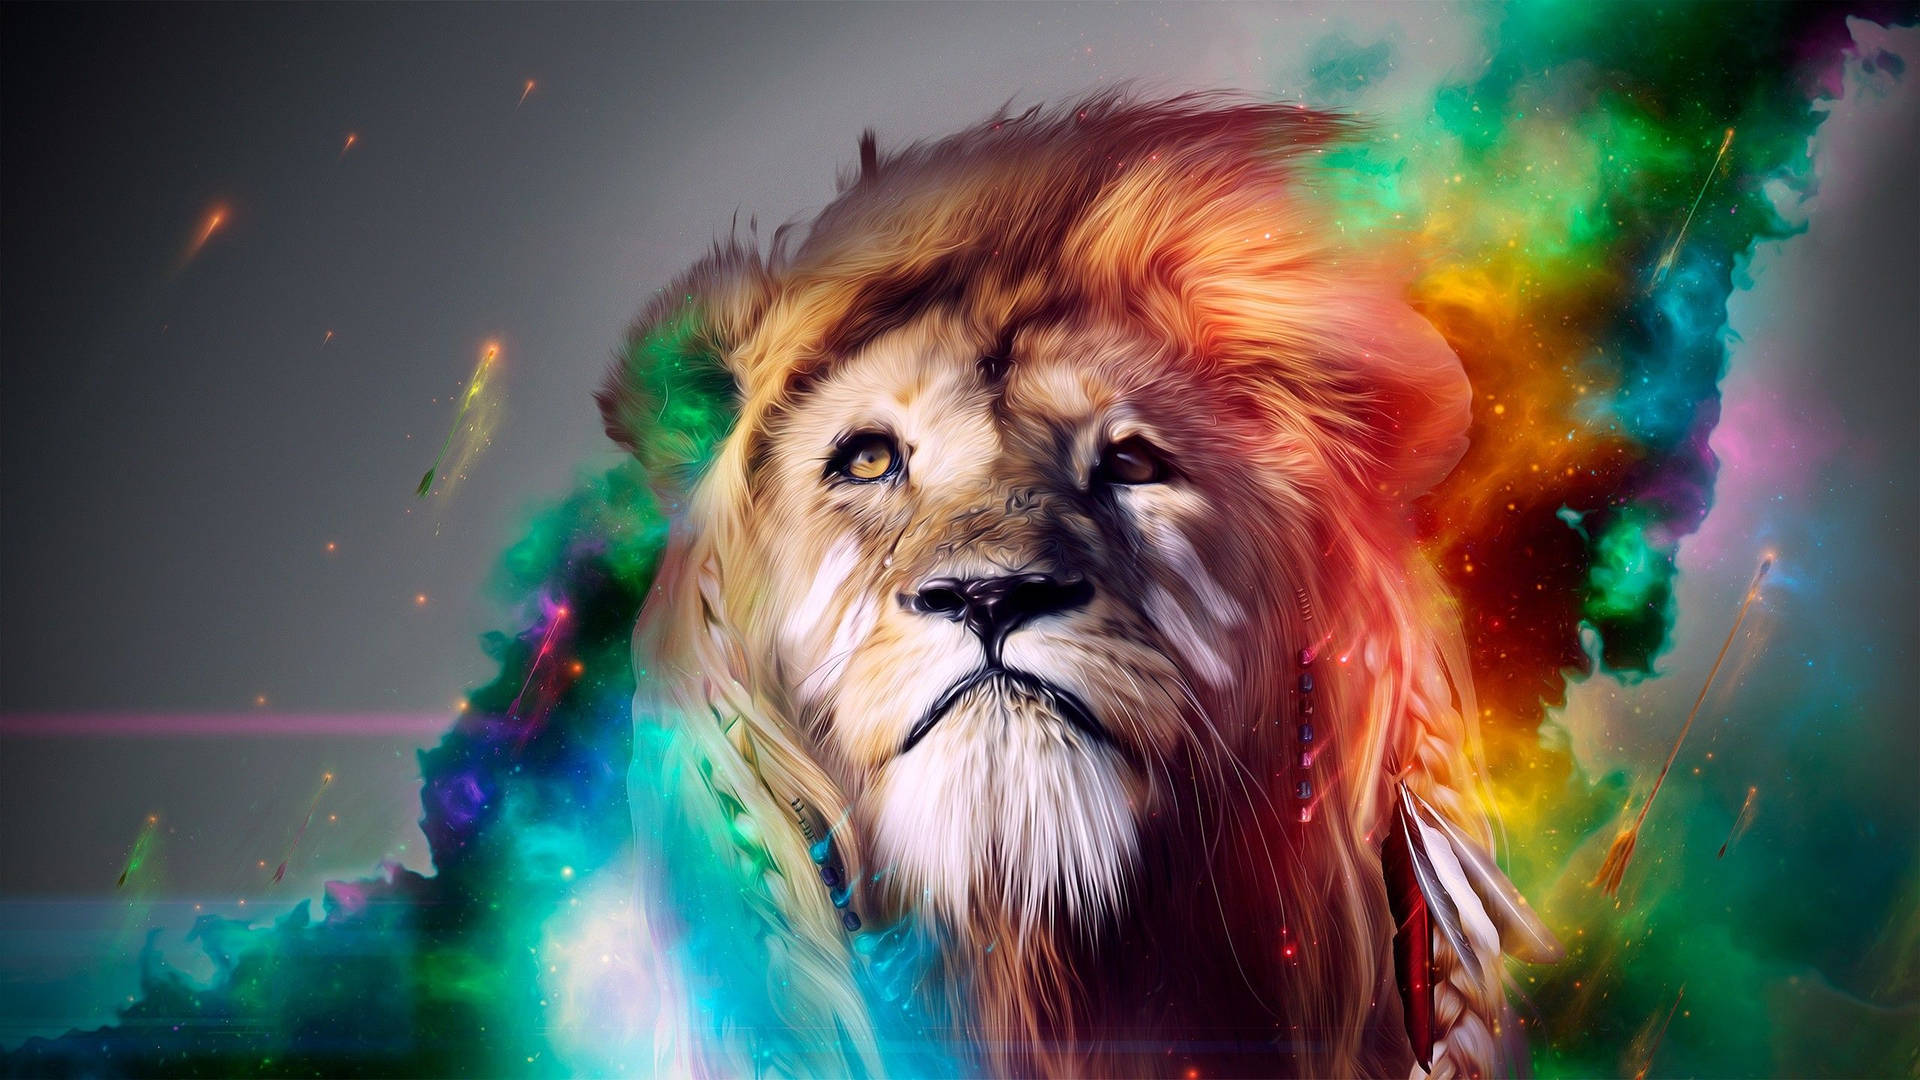 Lion With Colorful Smoke